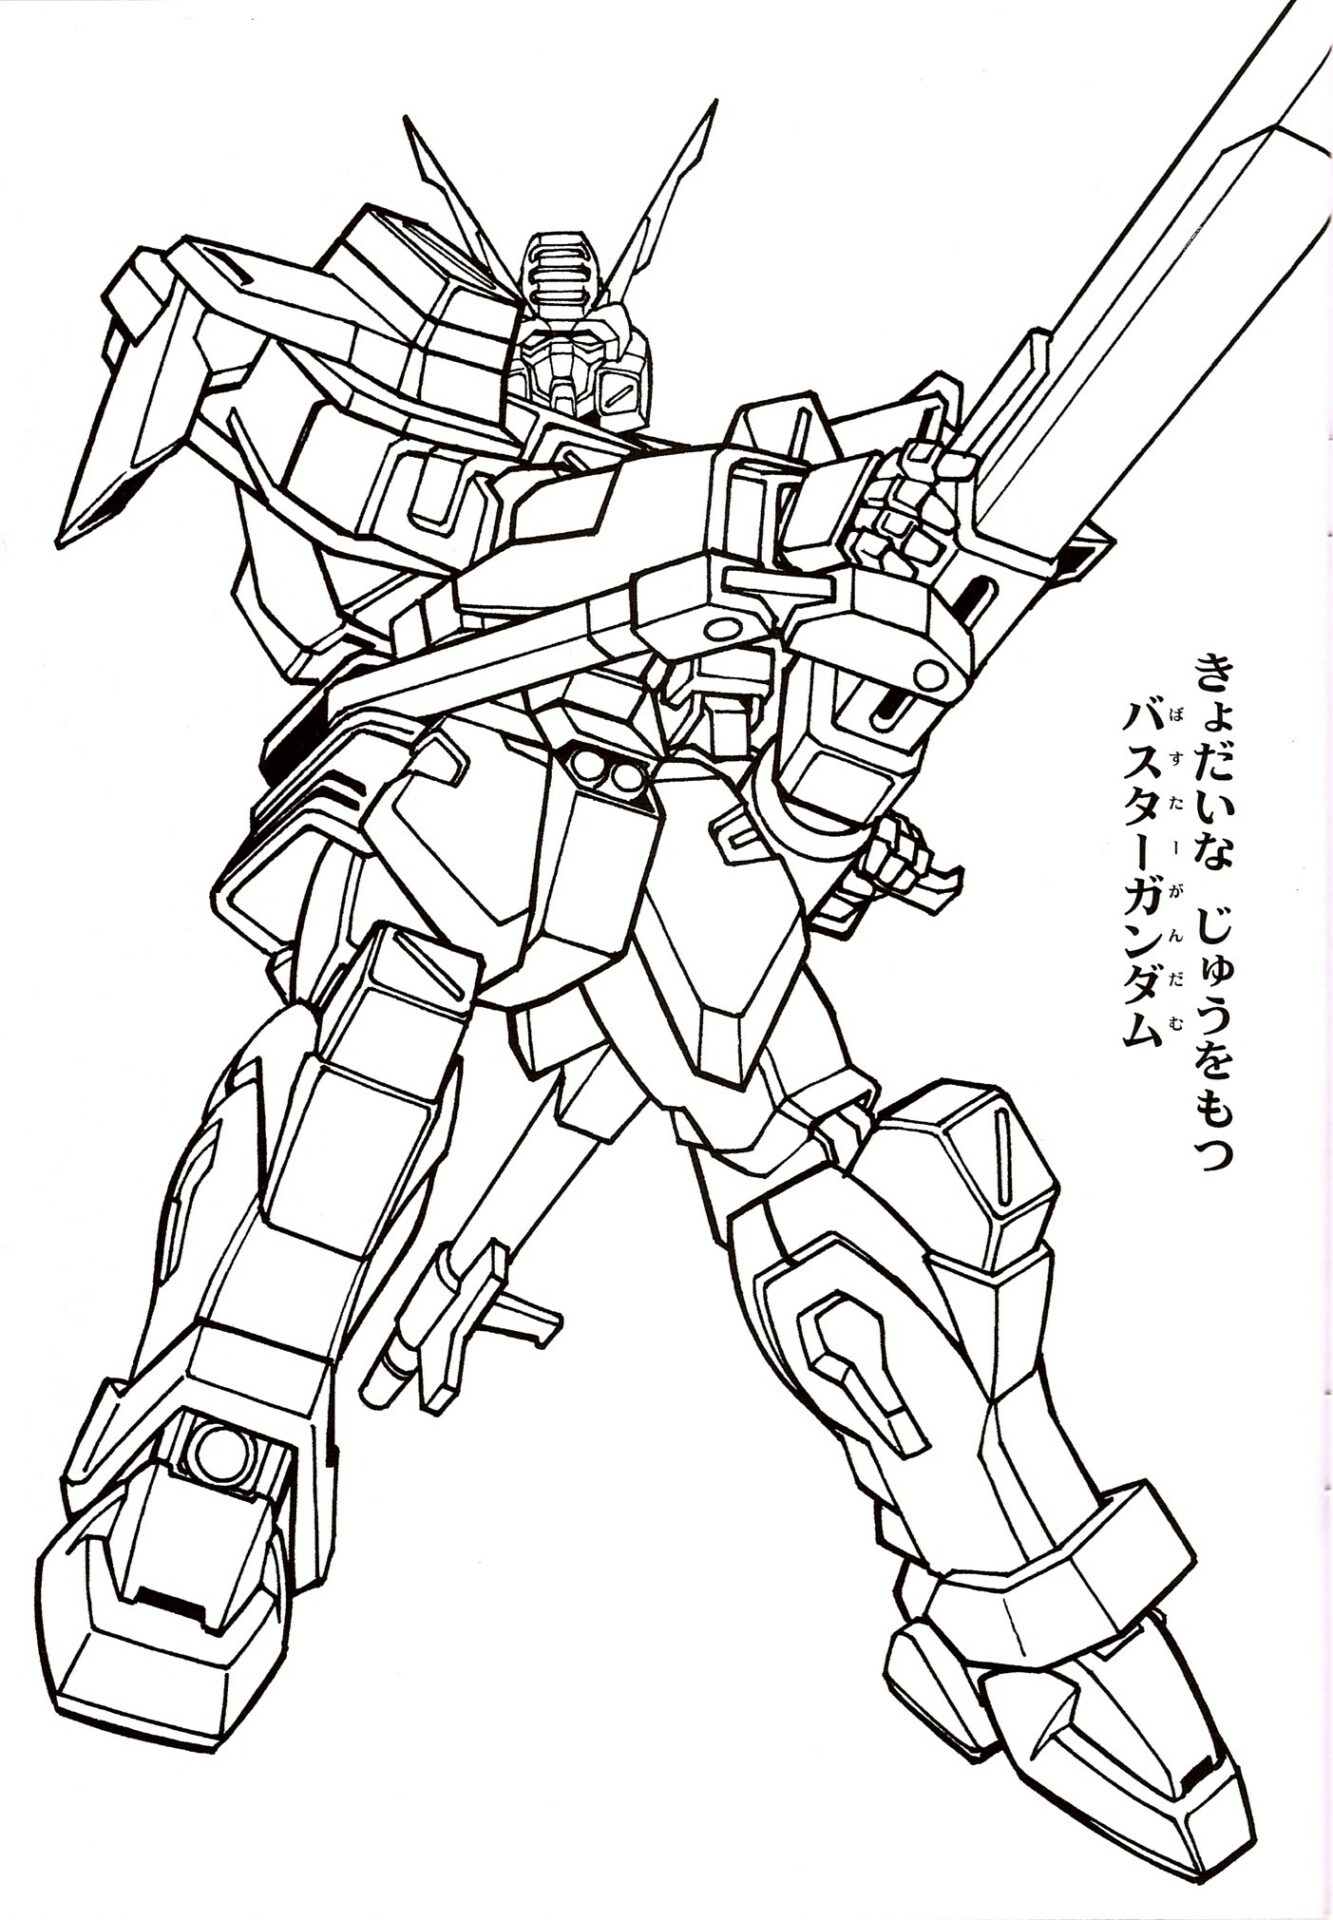 Gundam Japanese Anime Coloring Page   Free Printable Coloring ...